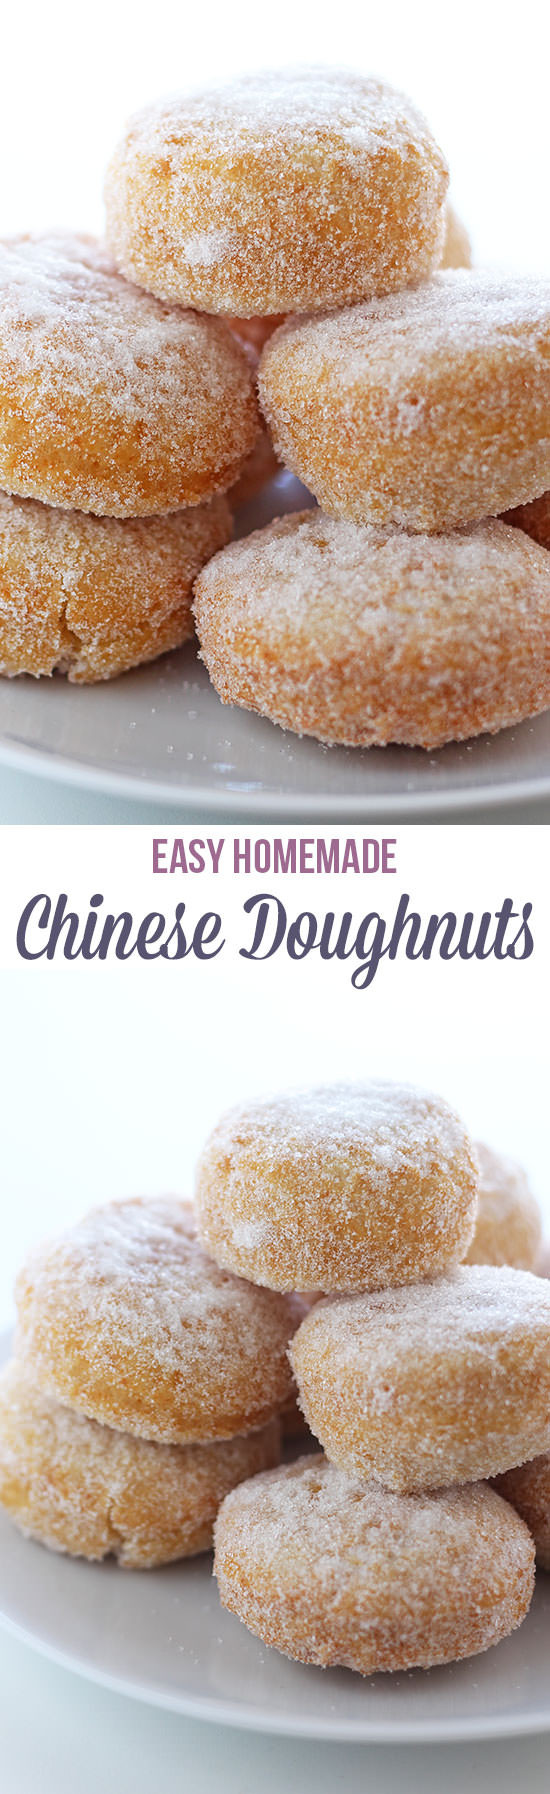 Chinese Doughnut Recipes
 Homemade Chinese Doughnuts Handle the Heat